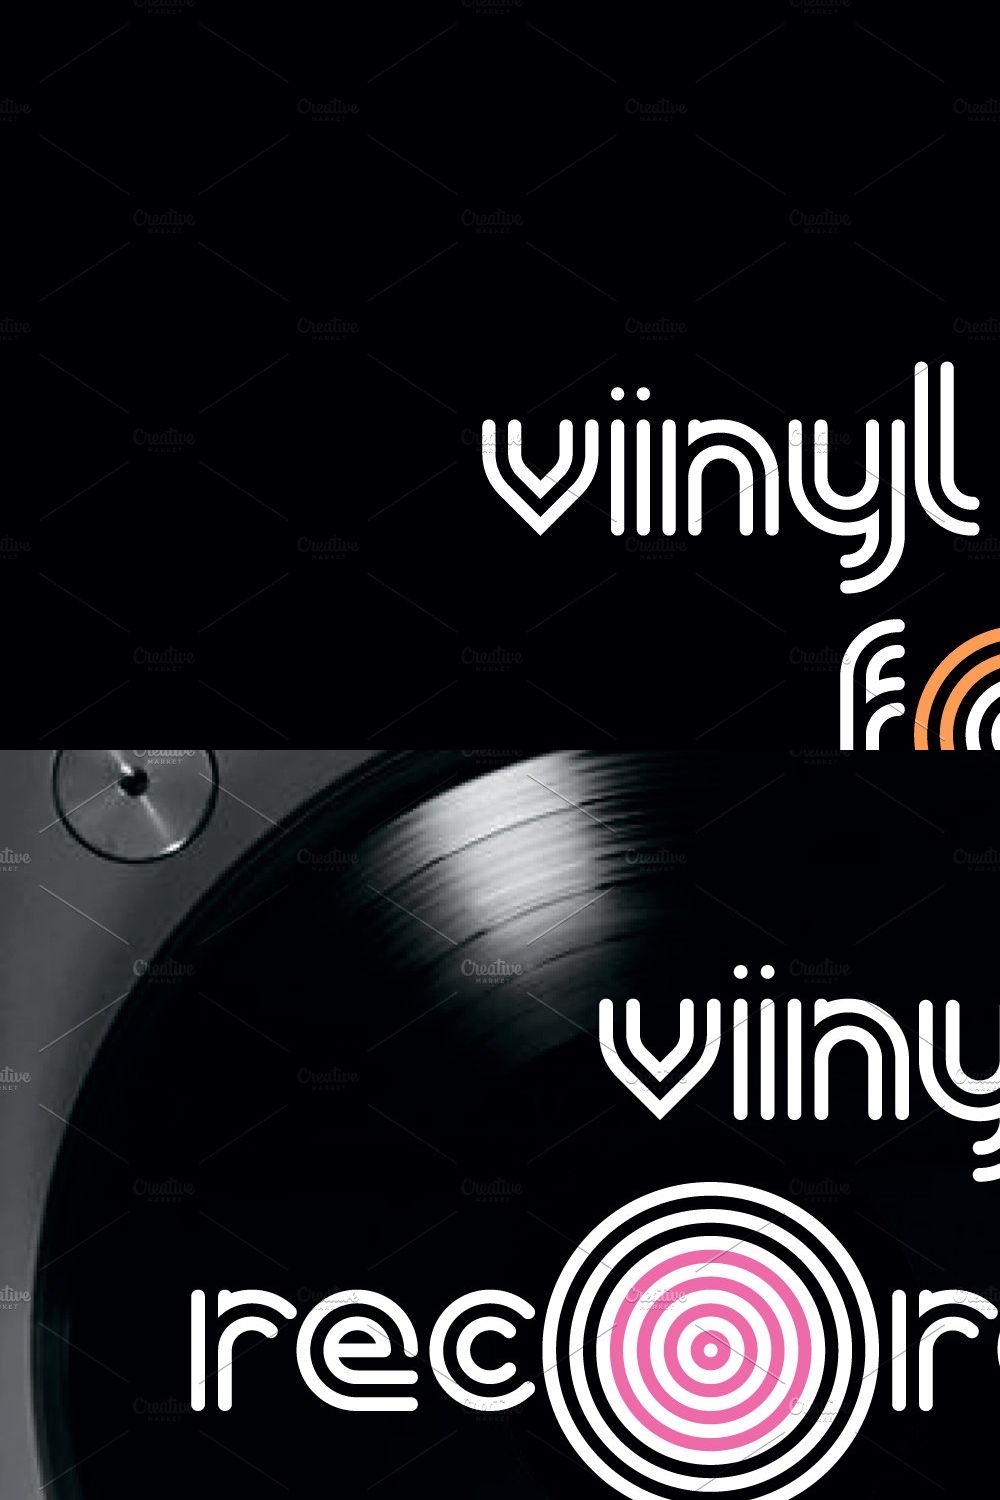 VinylFont pinterest preview image.